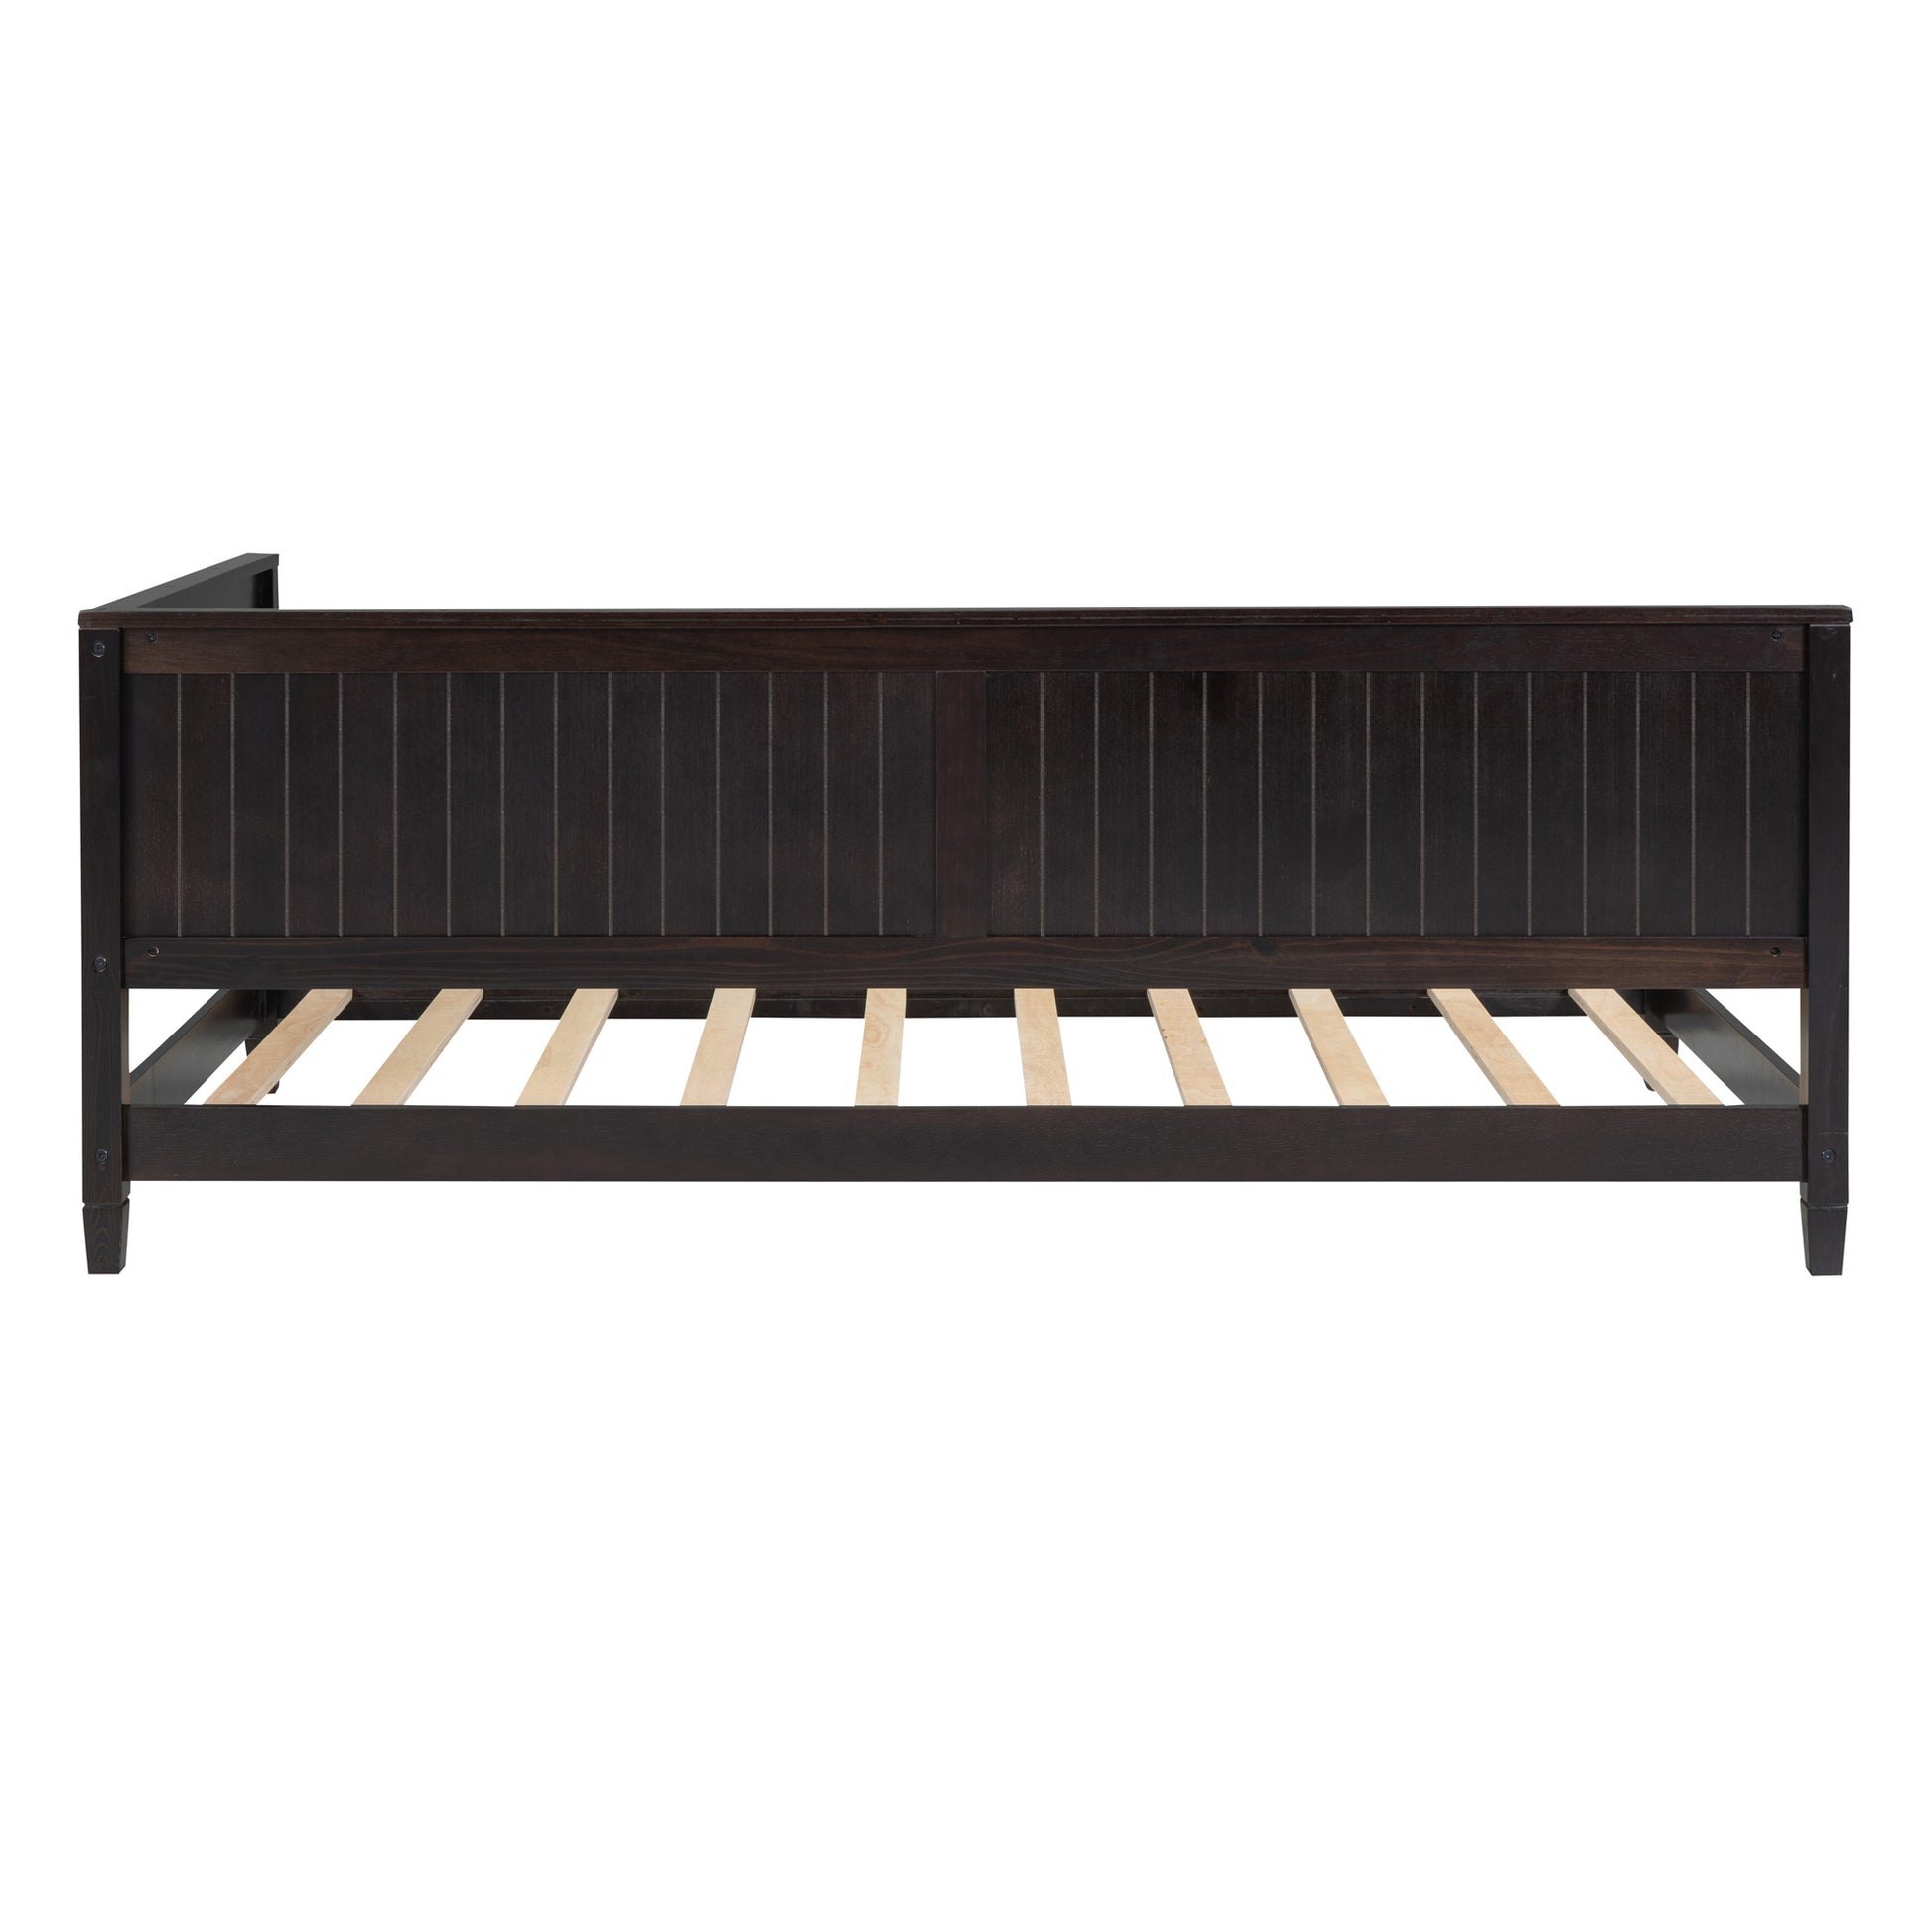 Twin Size Wood Daybed Sofa Bed, Espresso espresso-solid wood+mdf